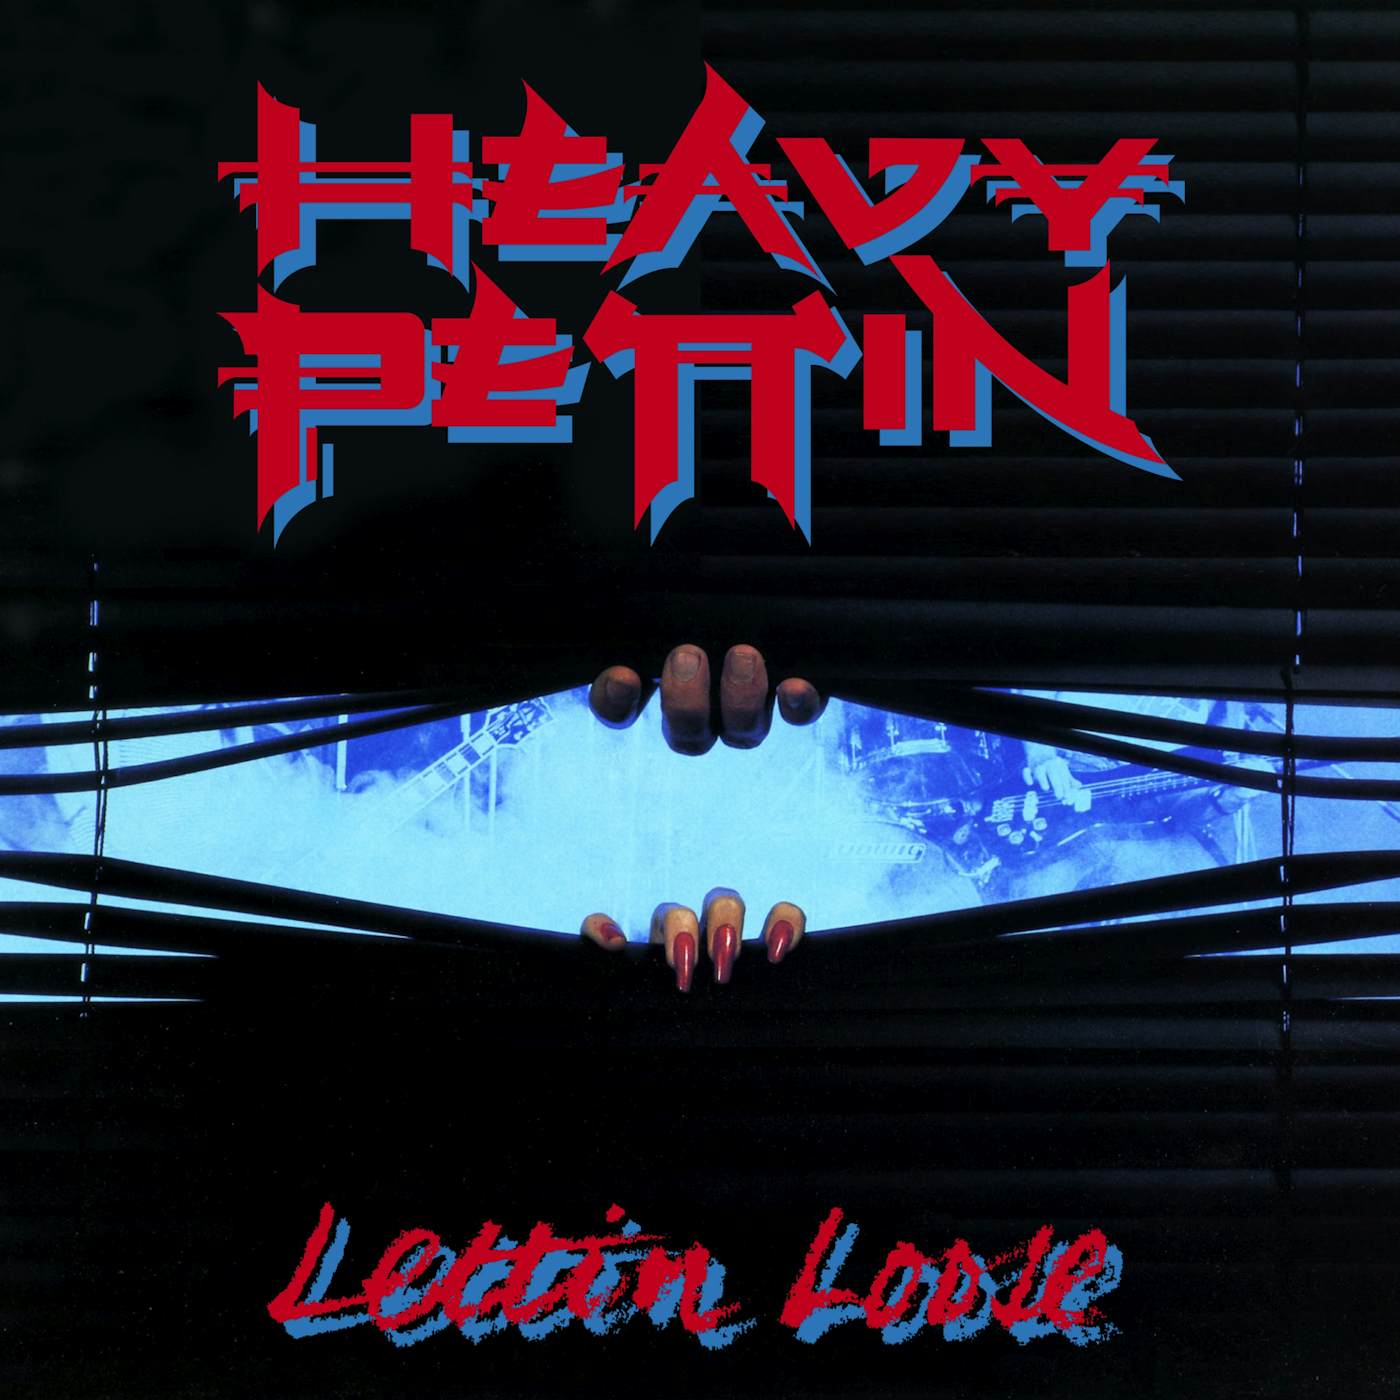 Heavy Pettin Lettin loose CD